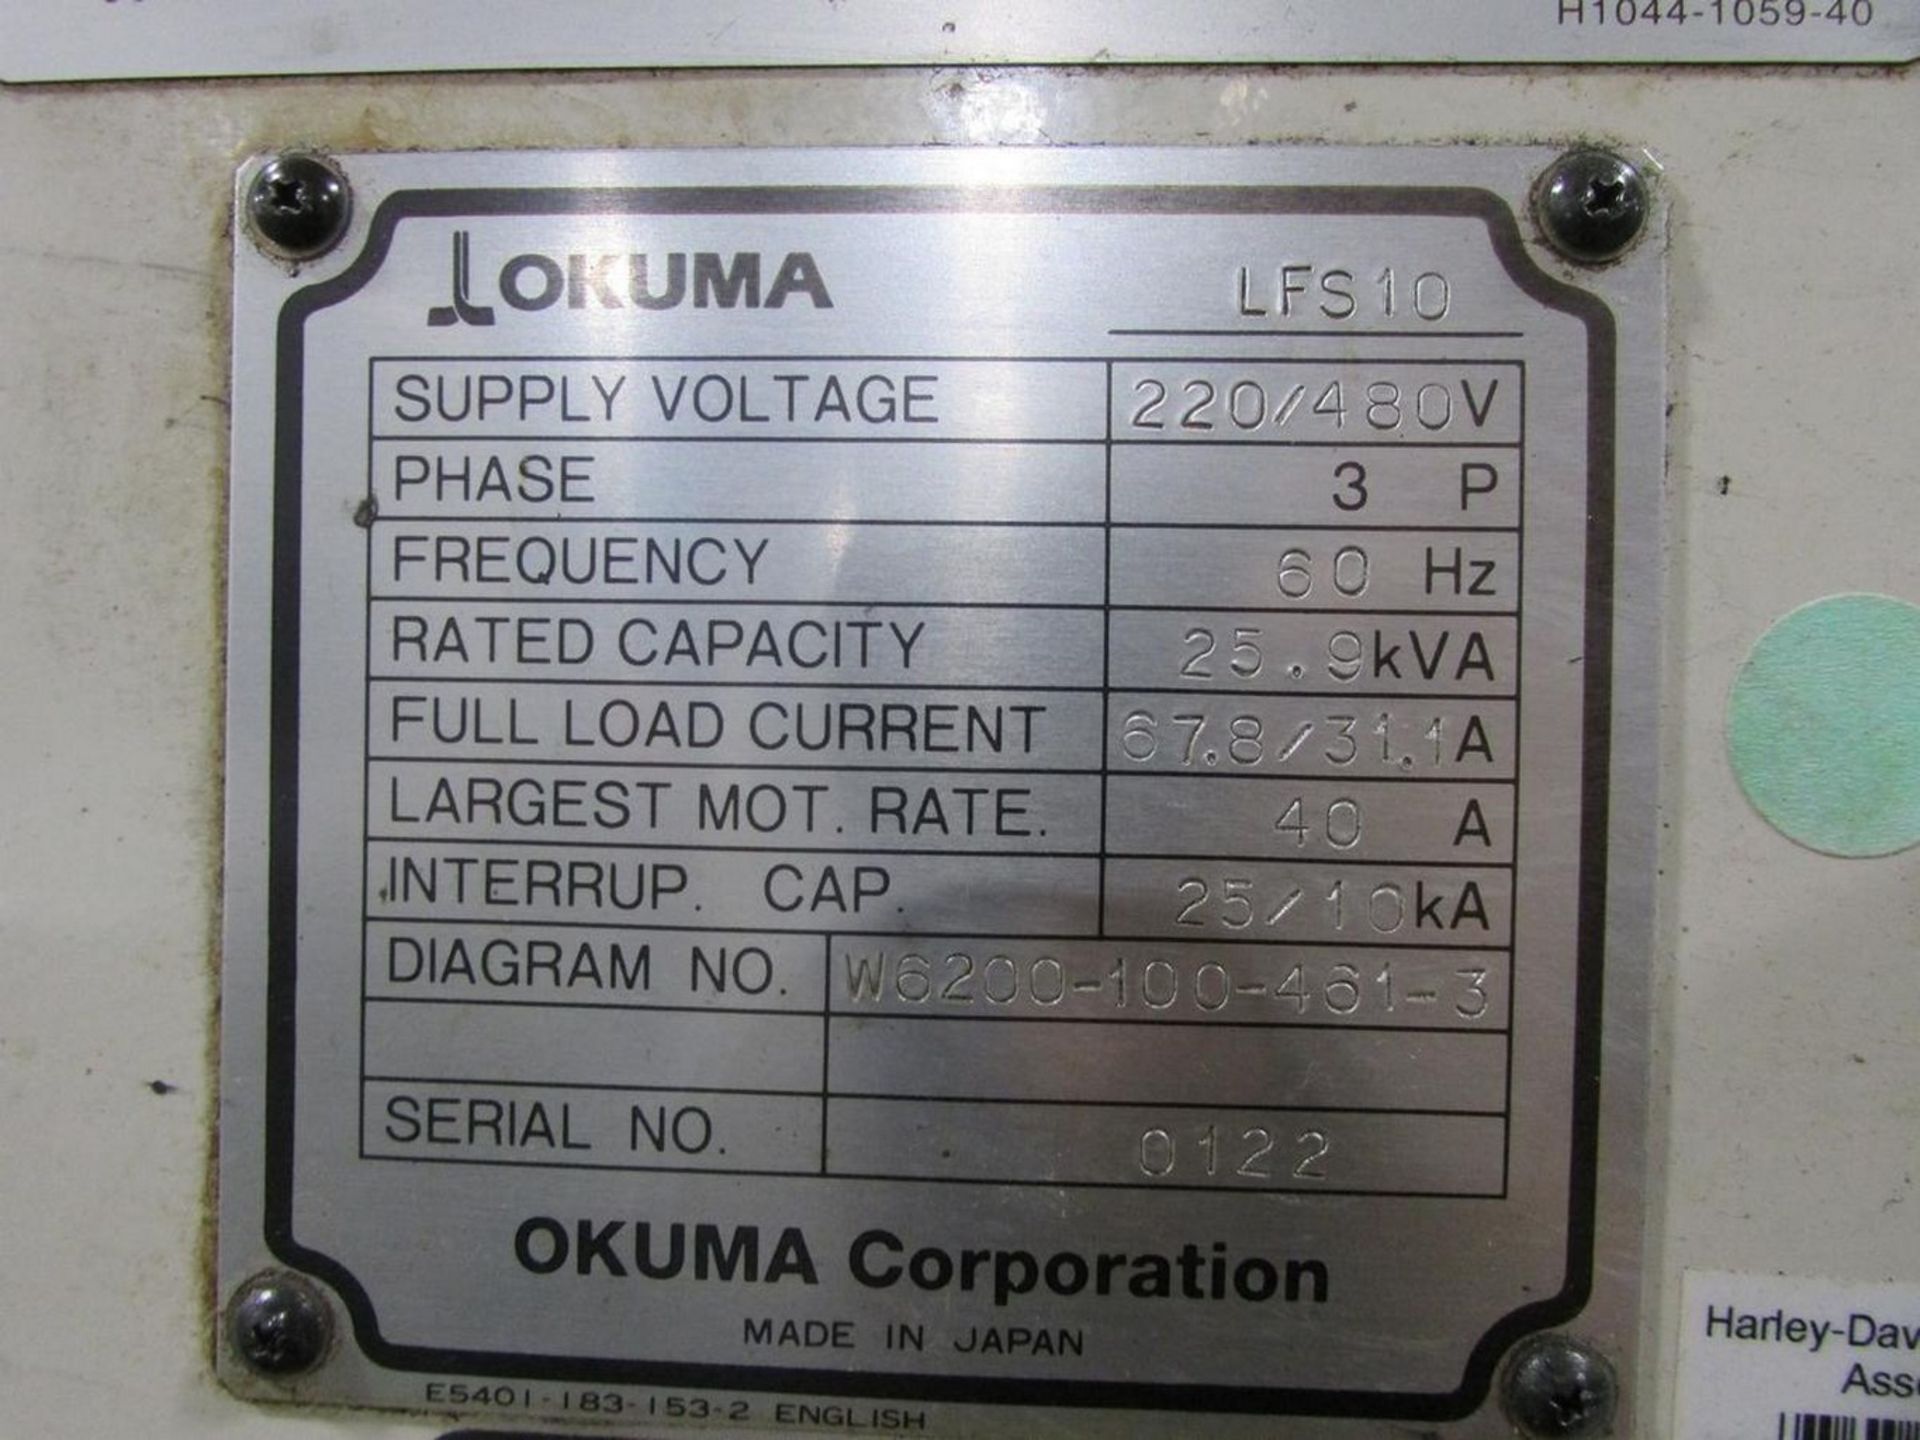 Okuma Lathe LFS10-2SP Twin-Spindle Twin-Turret CNC Turning Center, S/N 0122 - Image 15 of 15